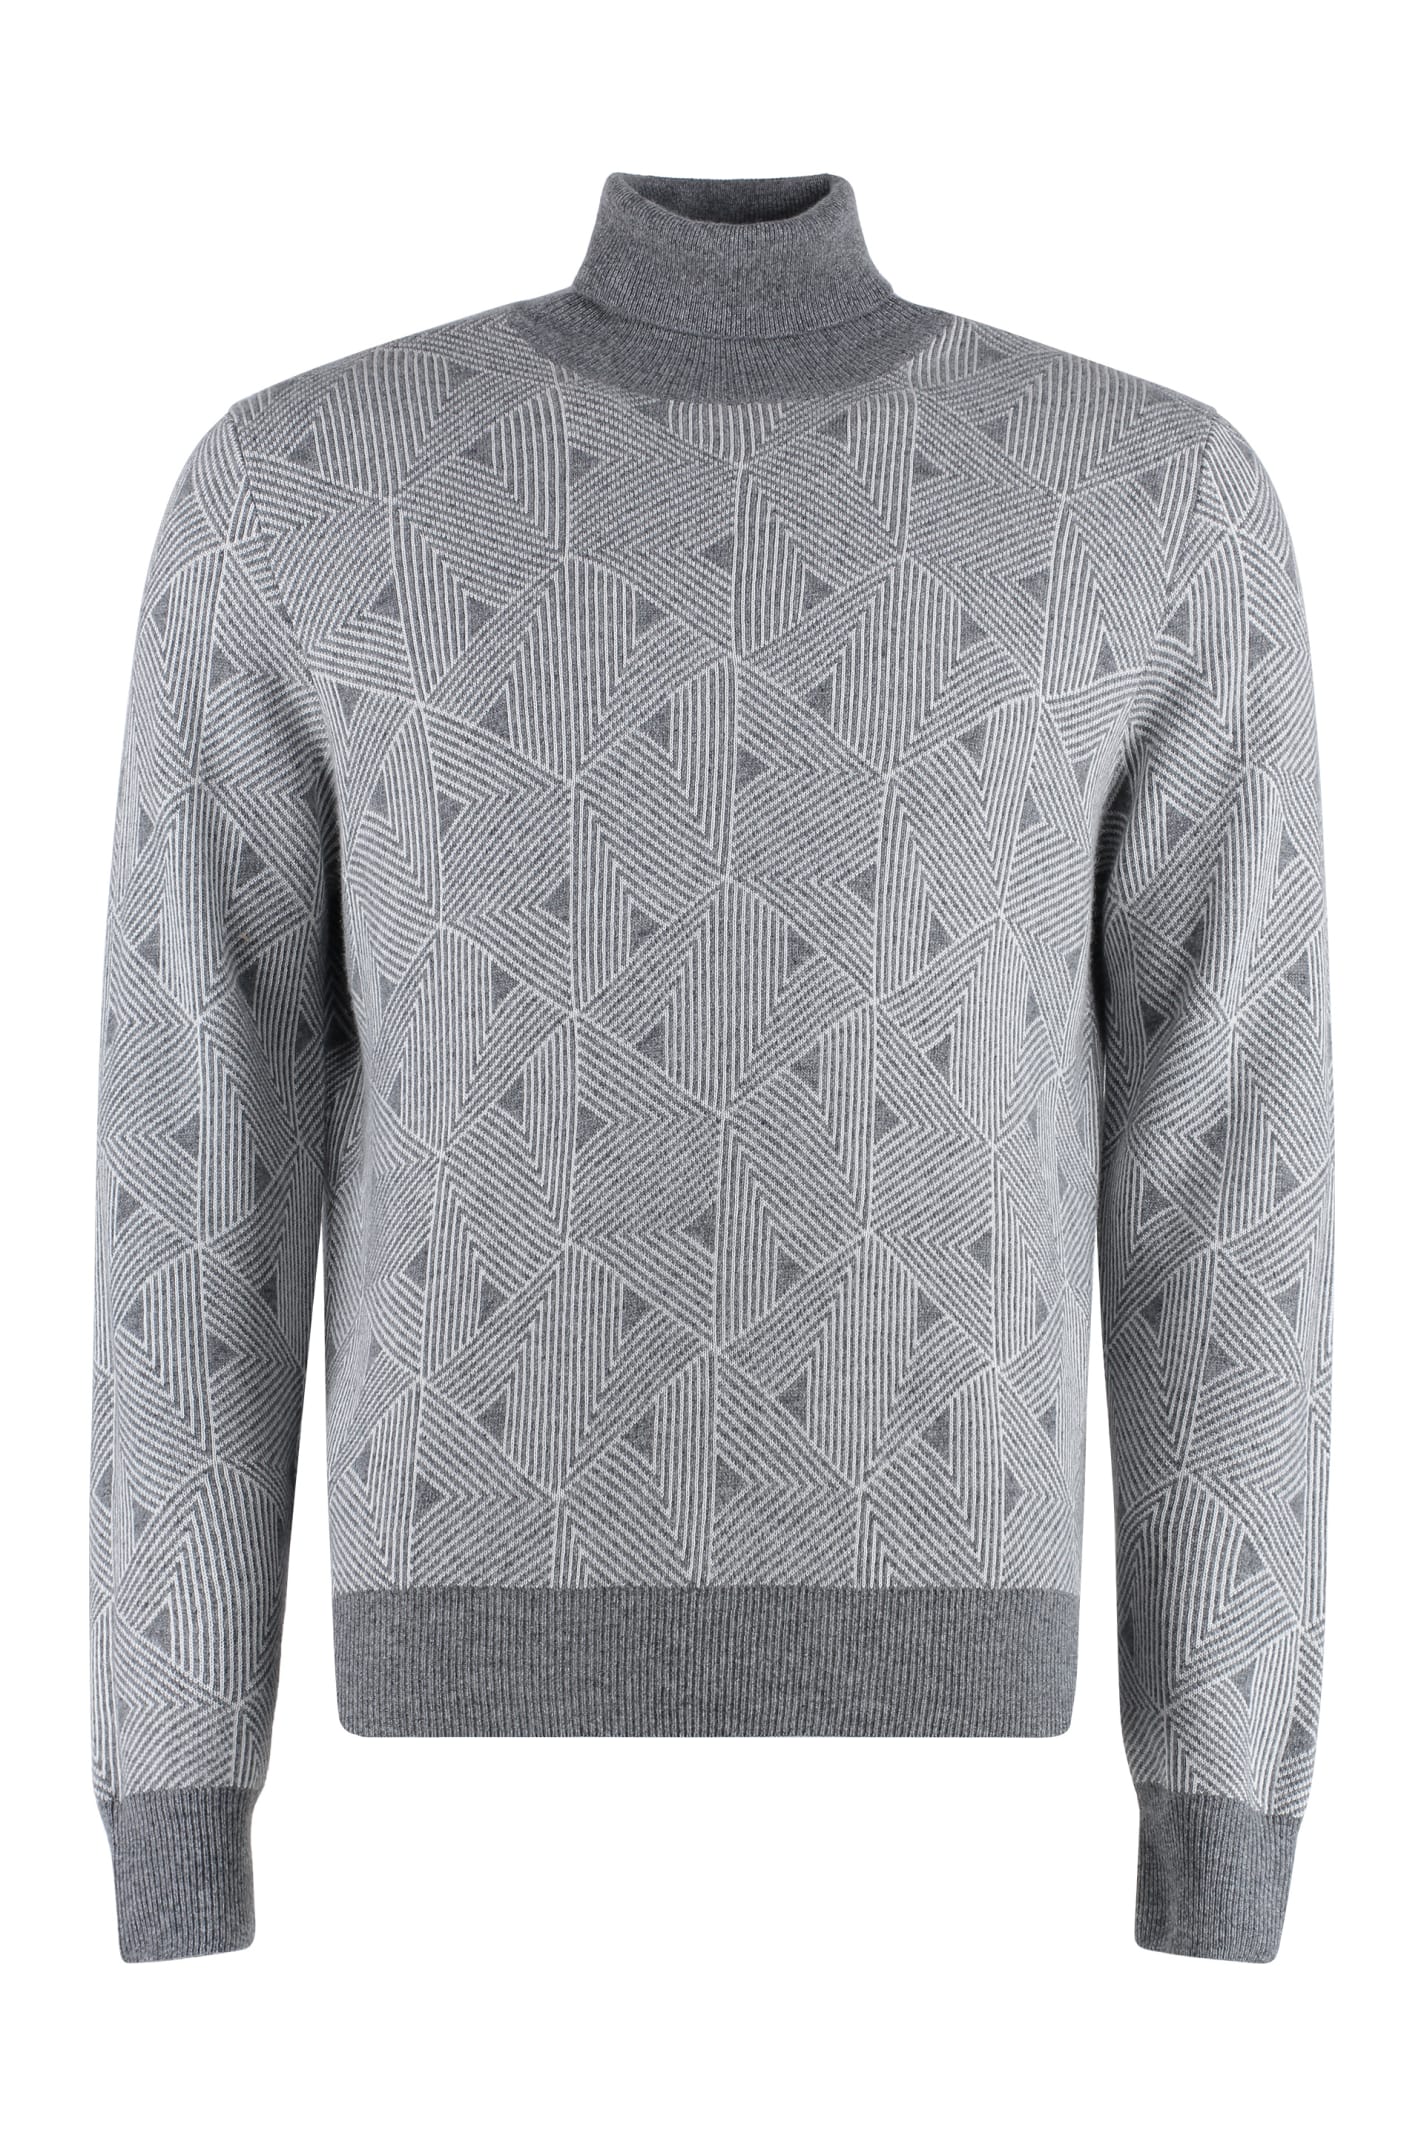 Canali Cashmere Blend Turtleneck Sweater